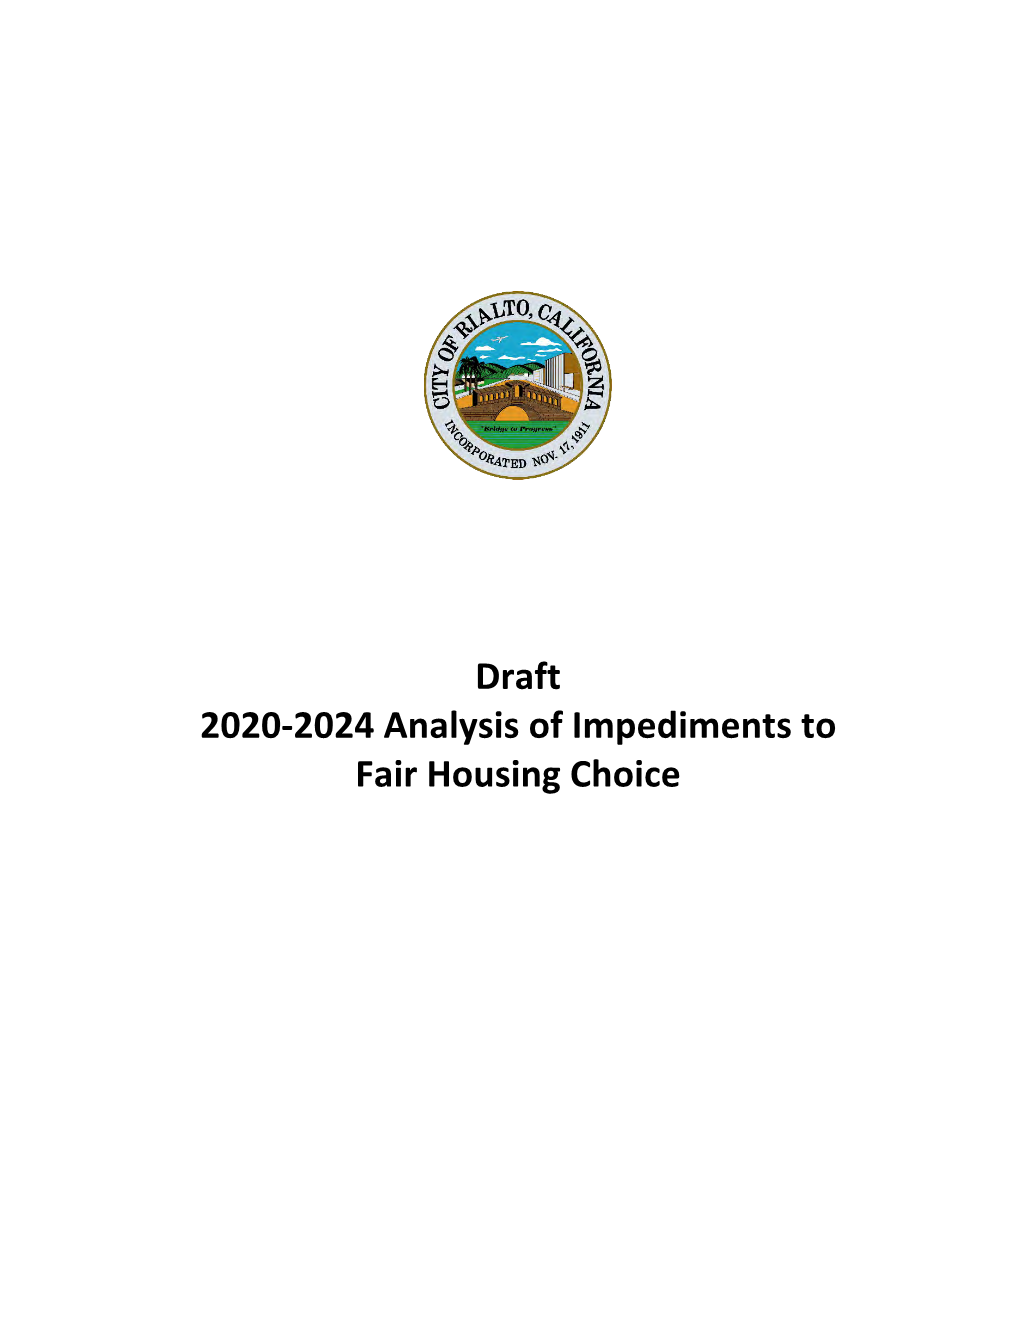 Draft 2020-2024 Analysis of Impediments to Fair Housing Choice